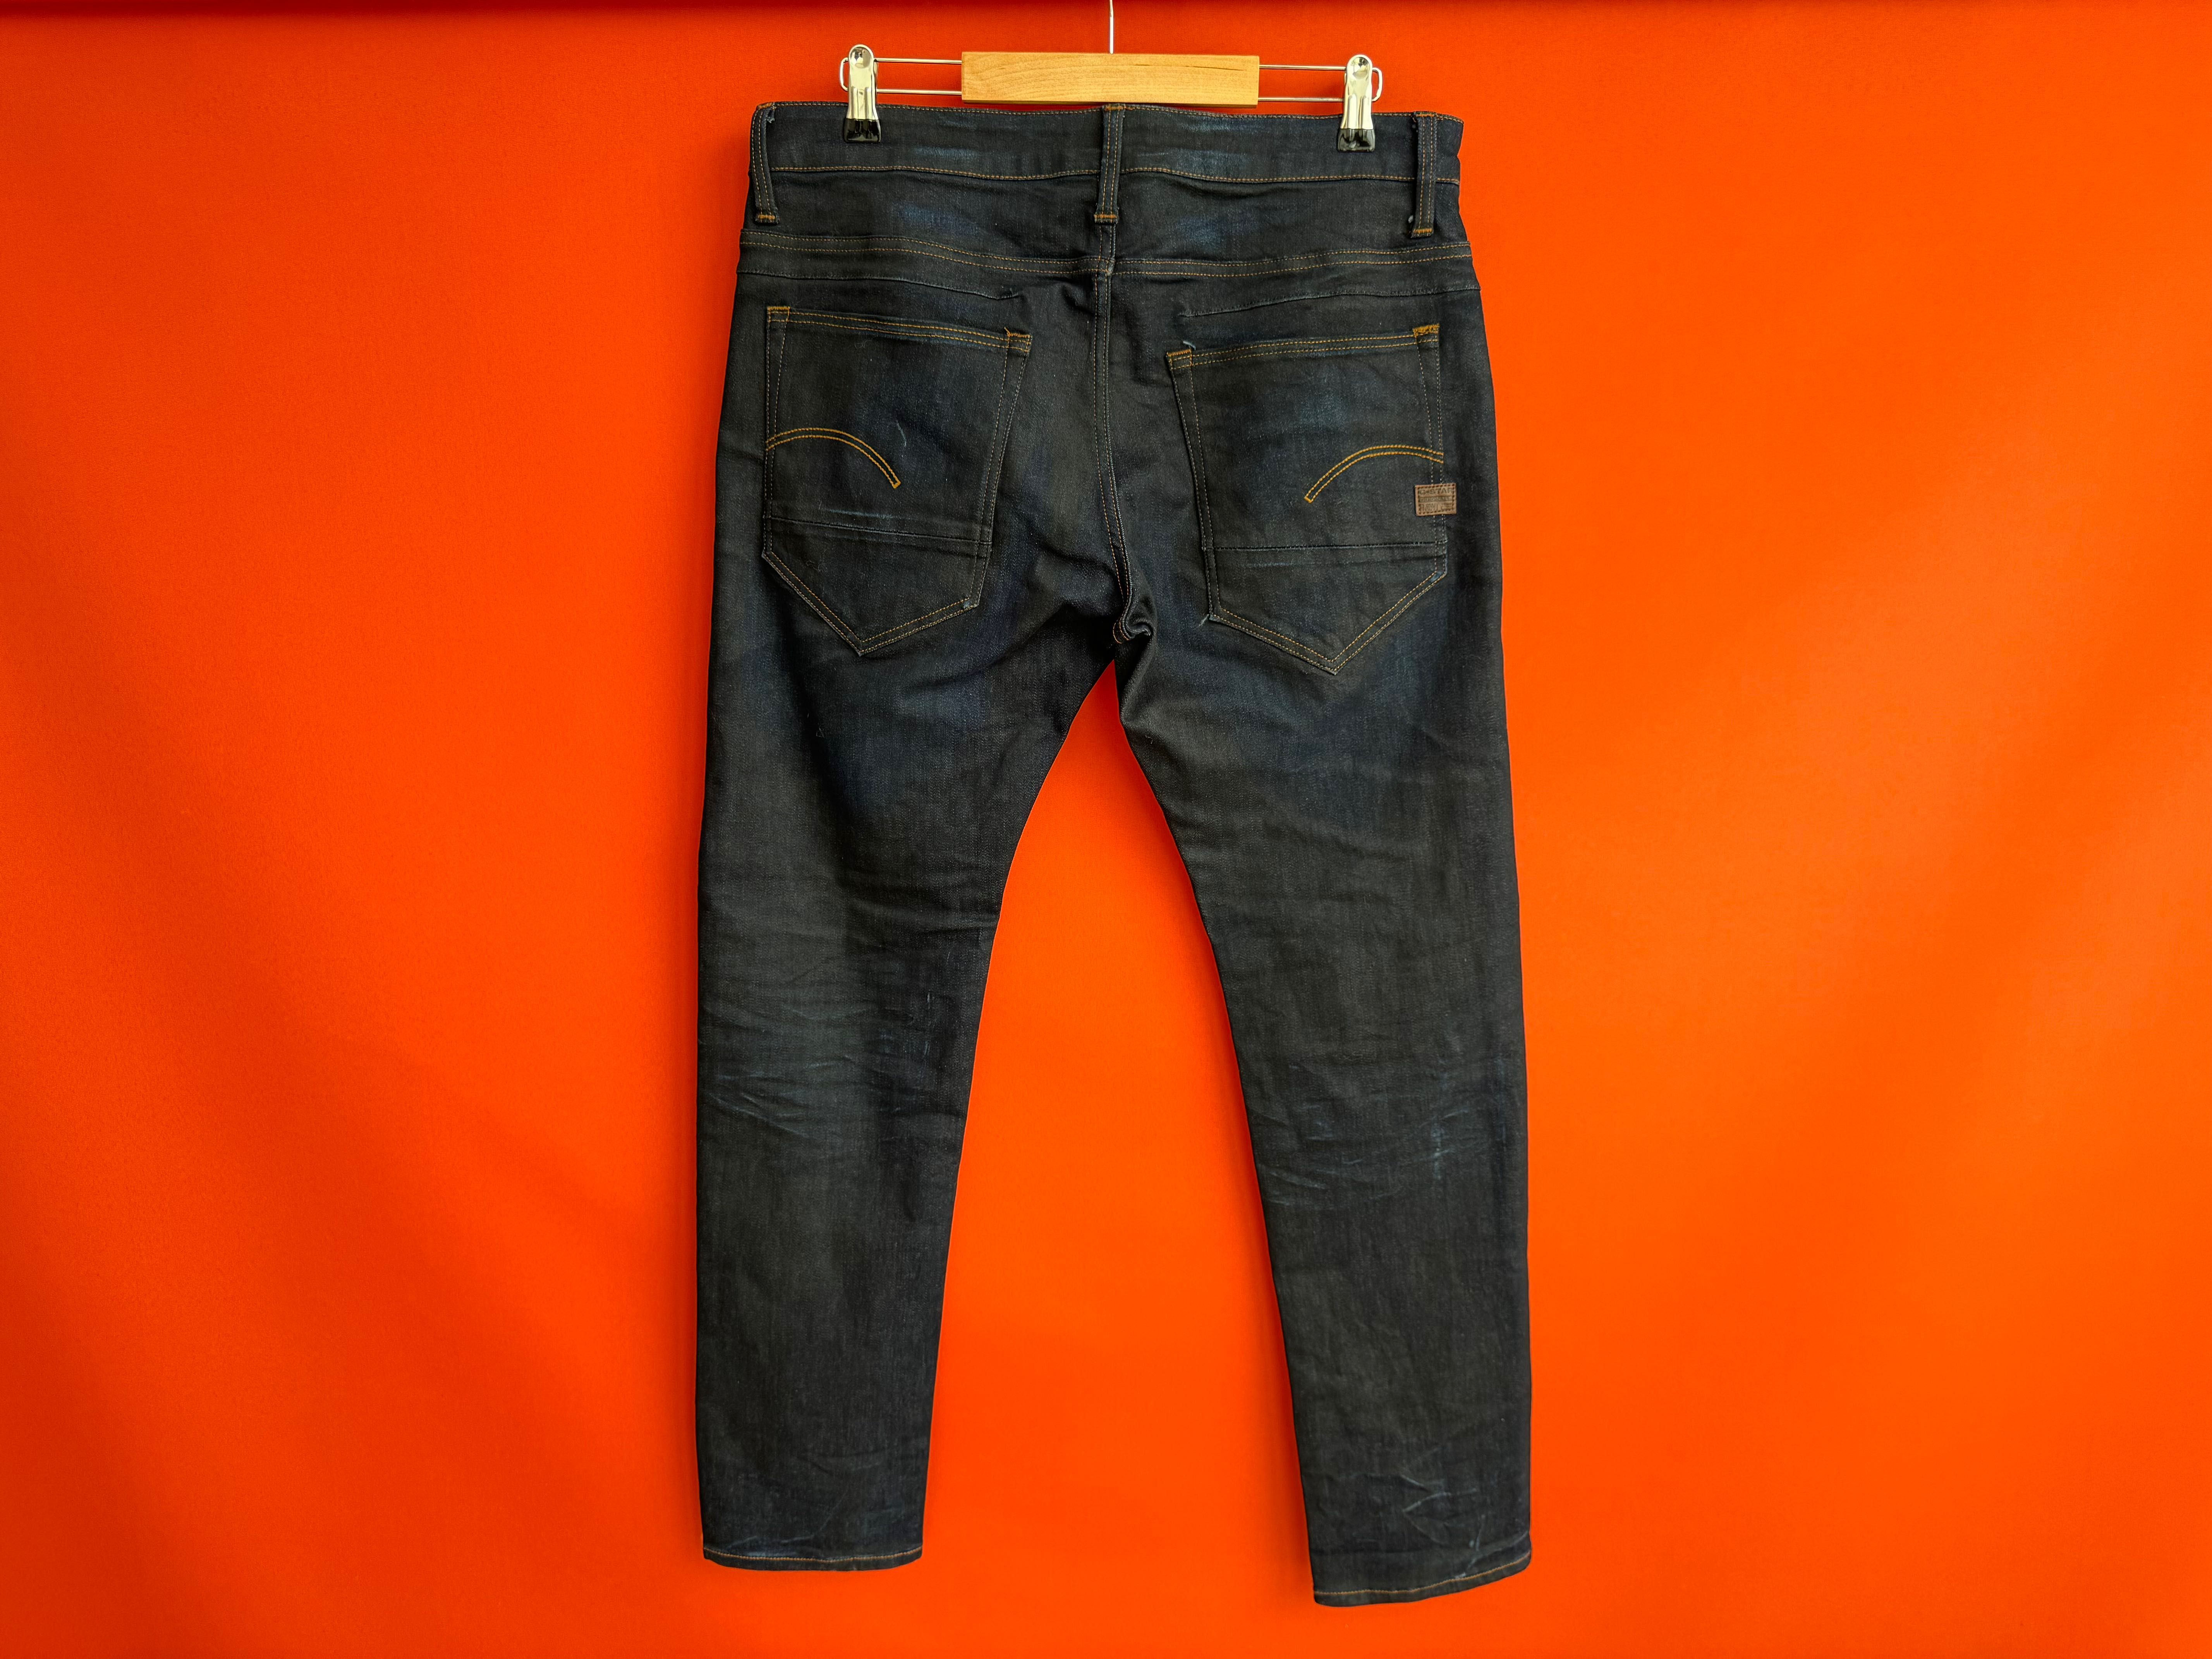 G-Star Raw D-Staq оригинал мужские джинсы штаны размер 33 34 Б У